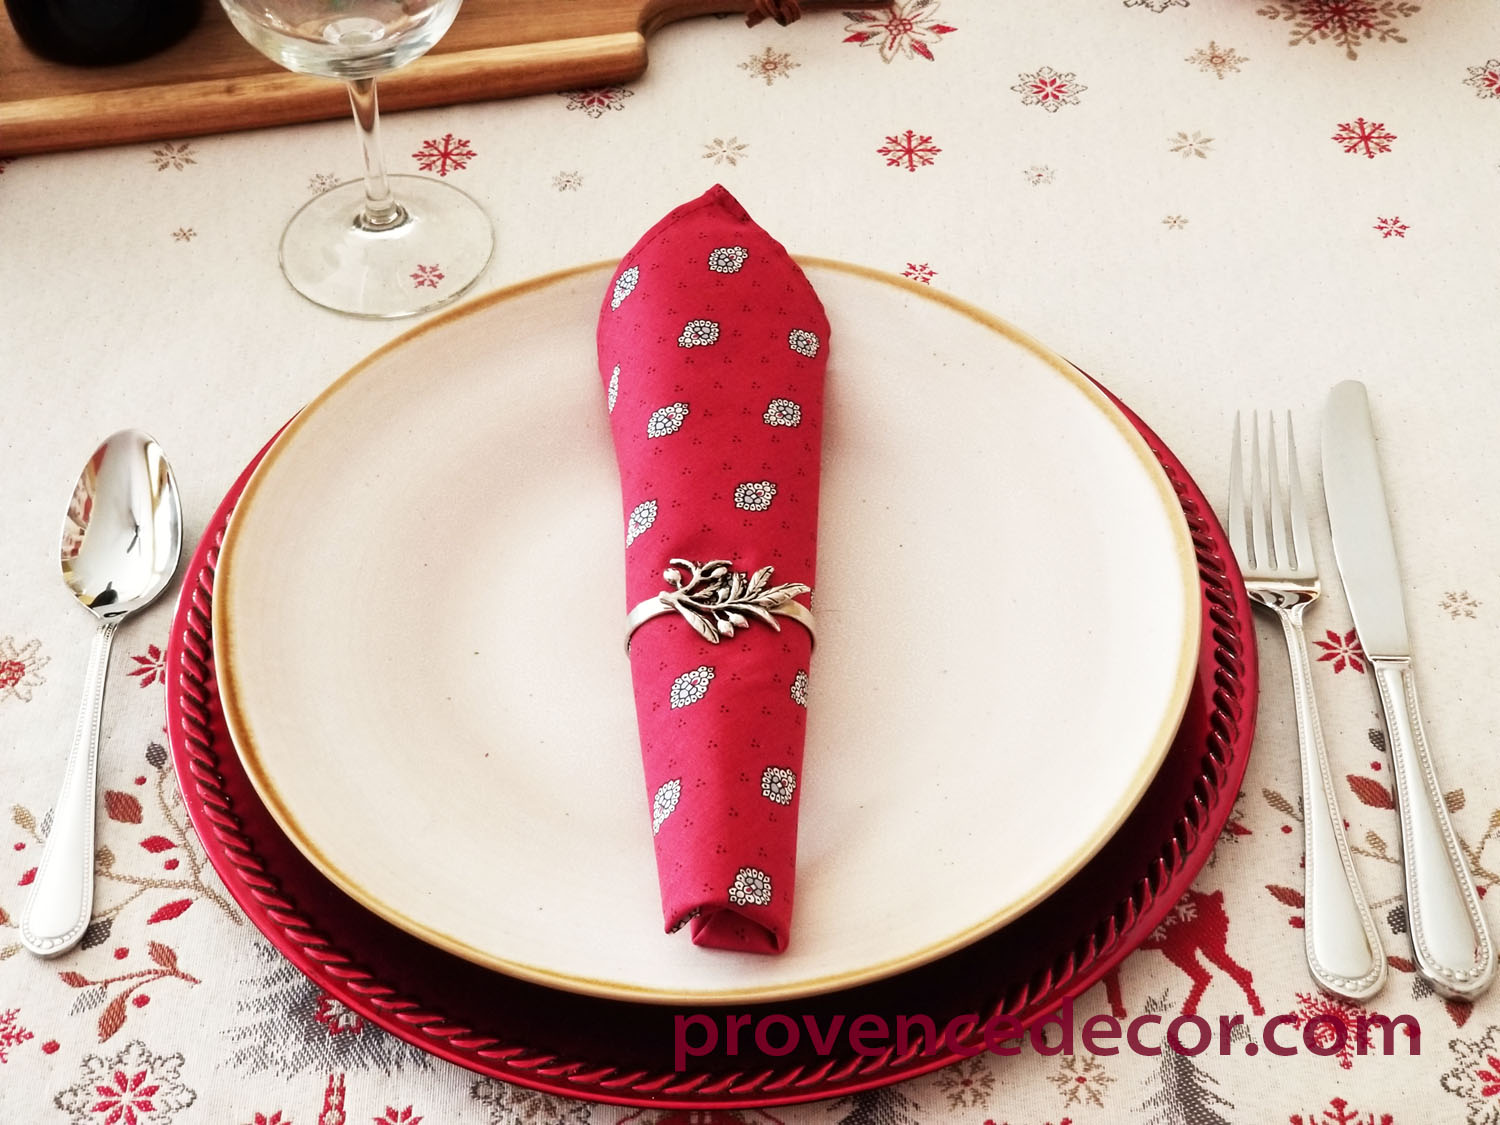 Christmas Spirit Red French Jacquard Cotton Dish Towel by Marat d'Avig - I  Dream of France